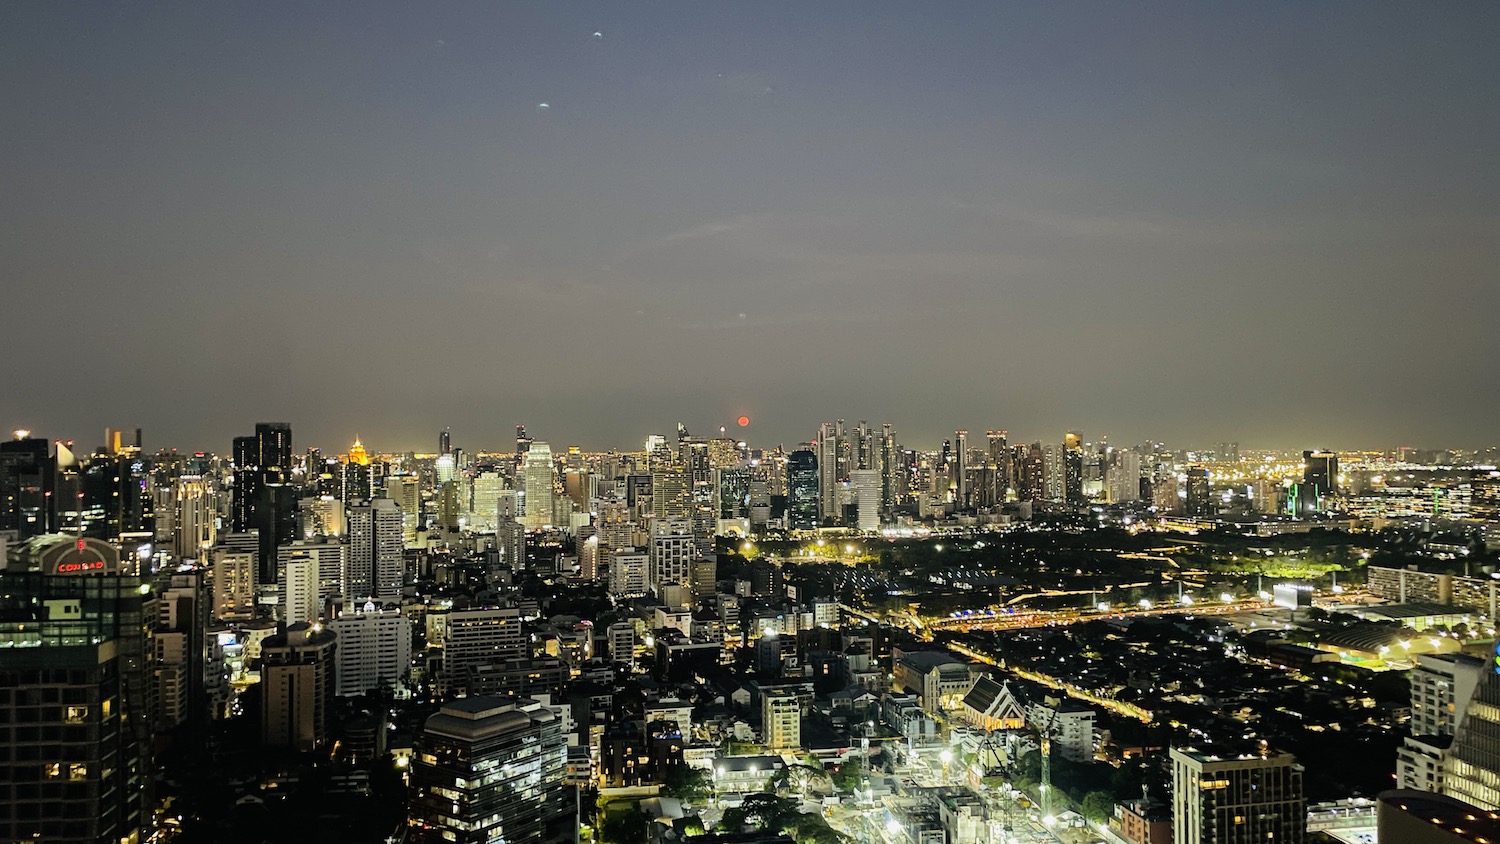 Bangkok by night!